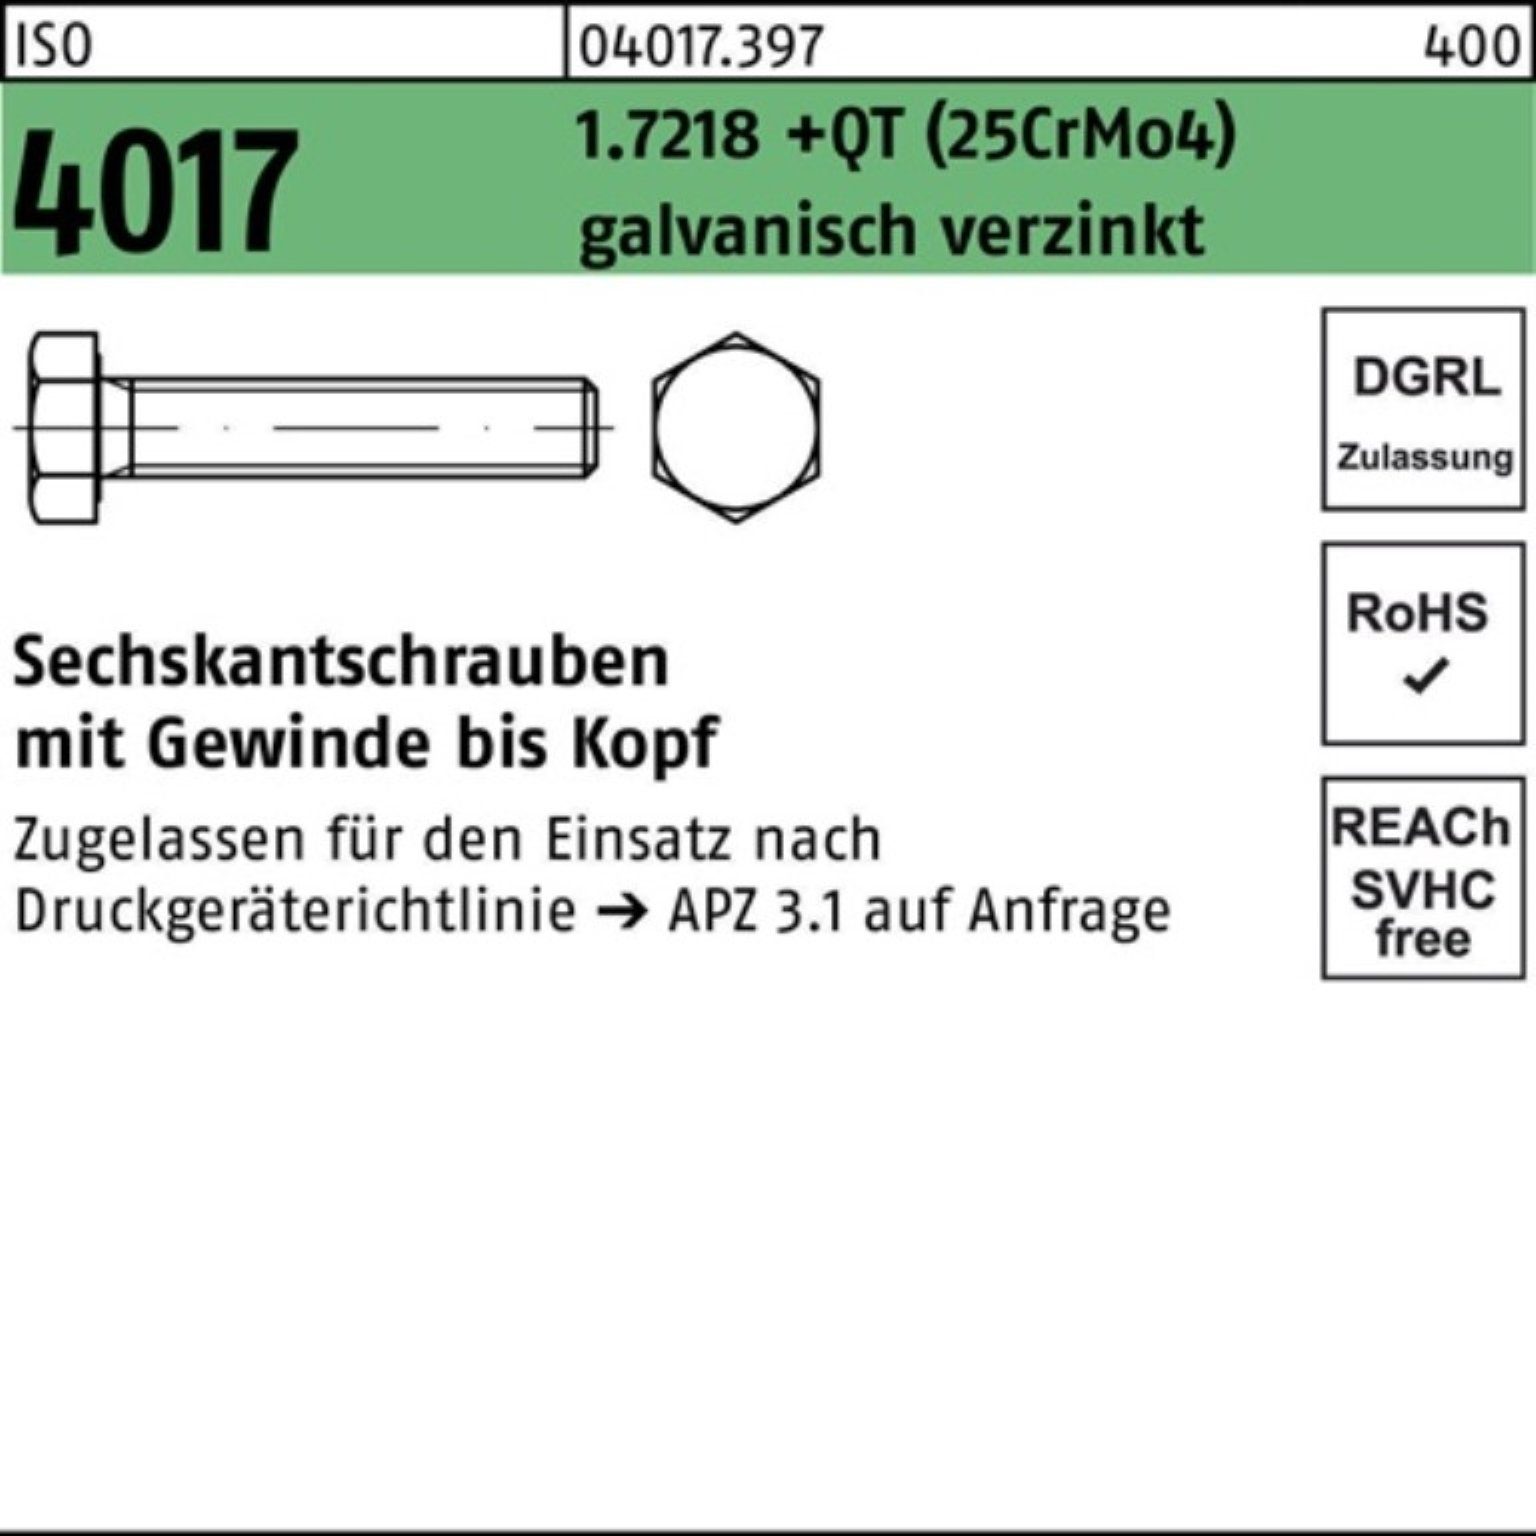 M33x100 (25CrMo4) Bufab 4017 Sechskantschraube Pack ISO +QT 100er 1.7218 Sechskantschraube VG